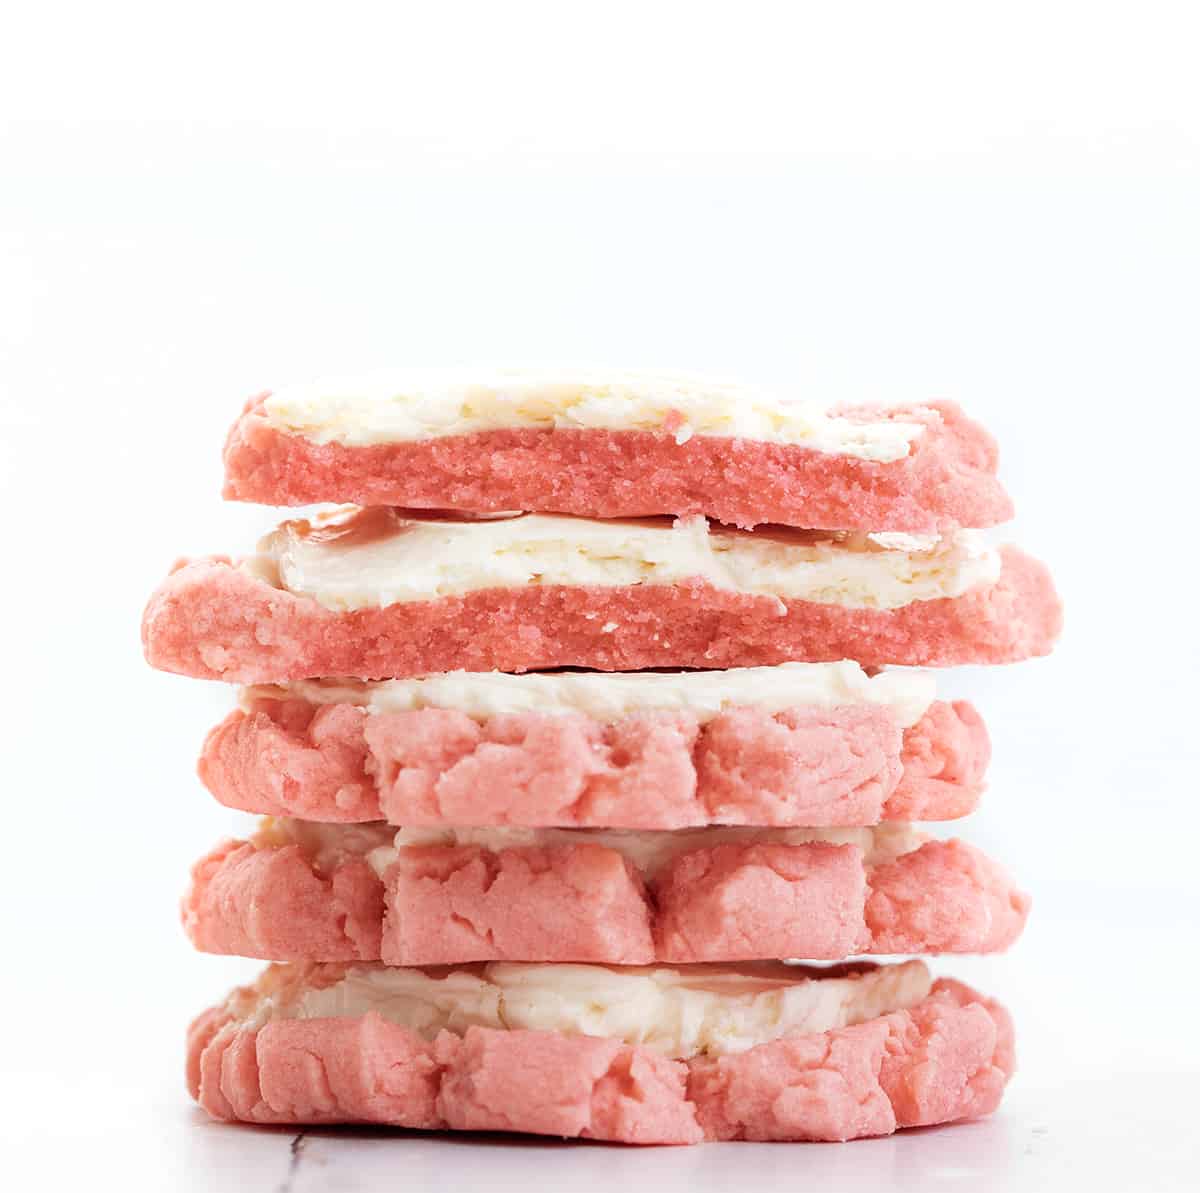 Stack of Pink Velvet Sugar Cookies with Easy Swiss Meringue Frosting with the Top Cookies Broken in Half.